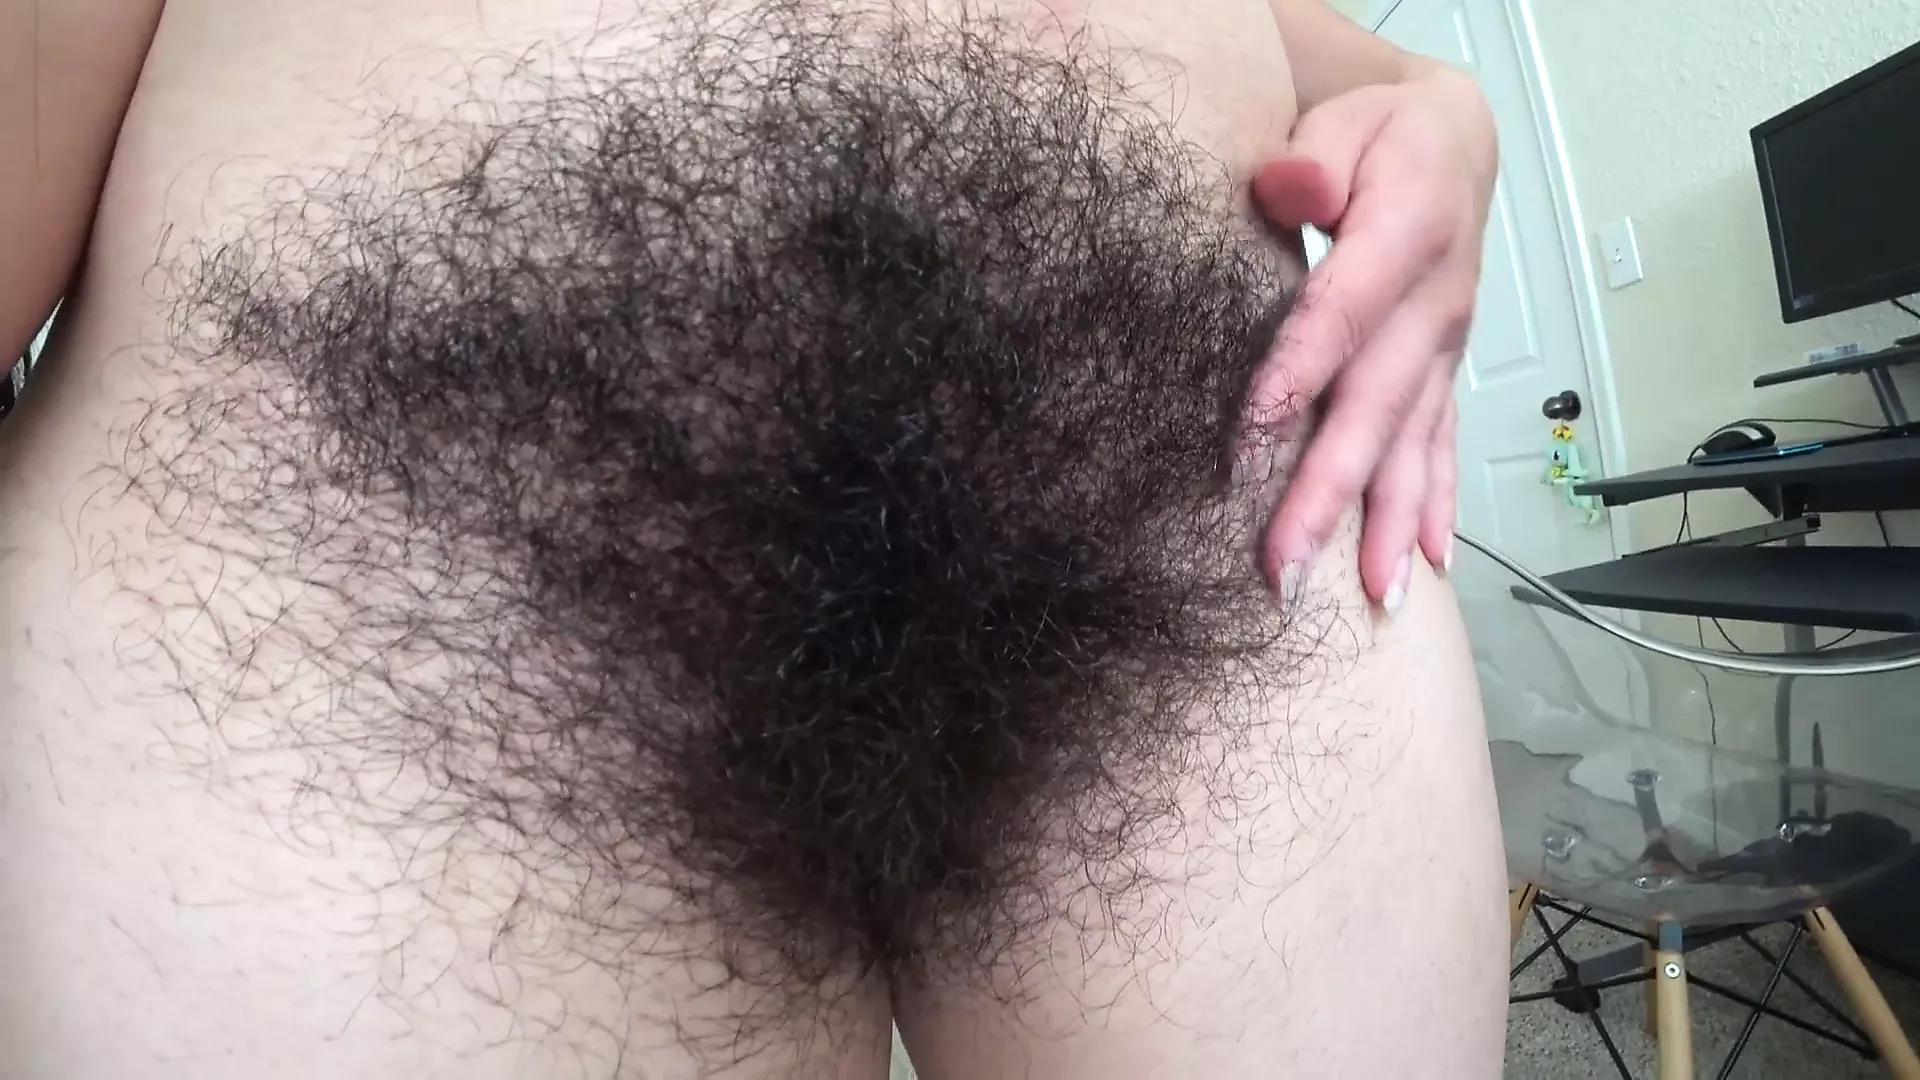 Extremely hairy girl image